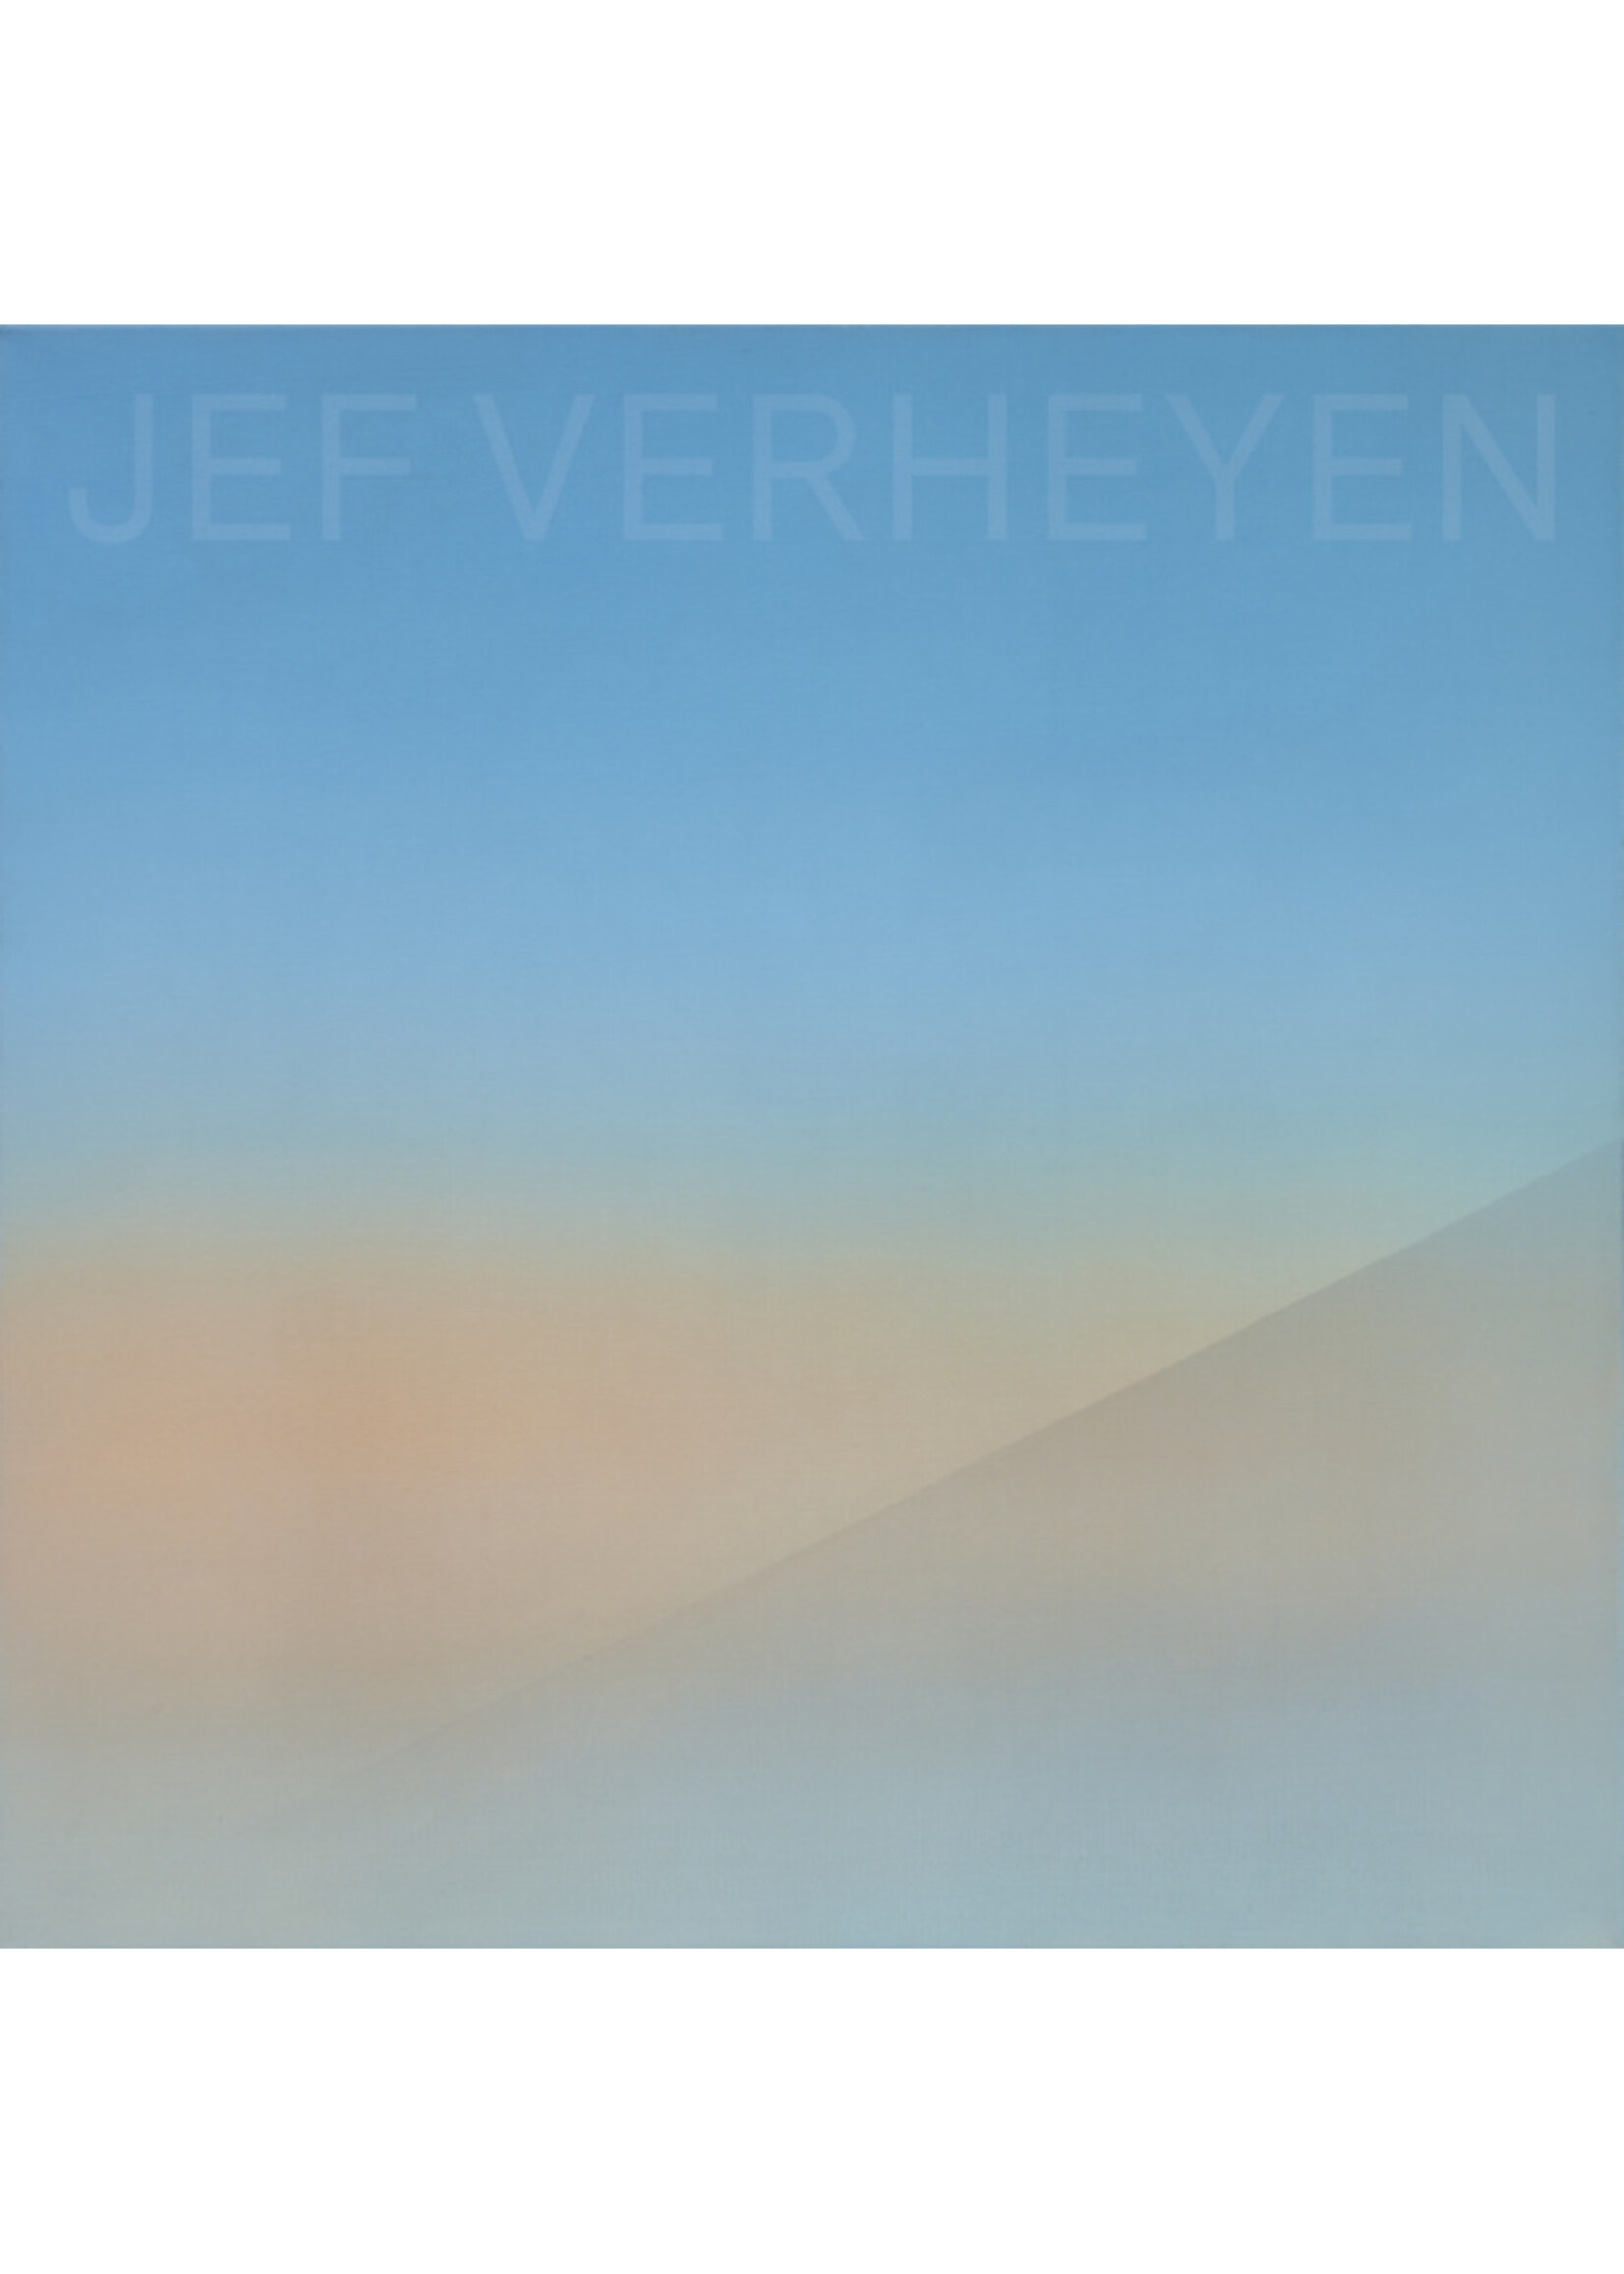 Jef Verheyen - Window on Infinity